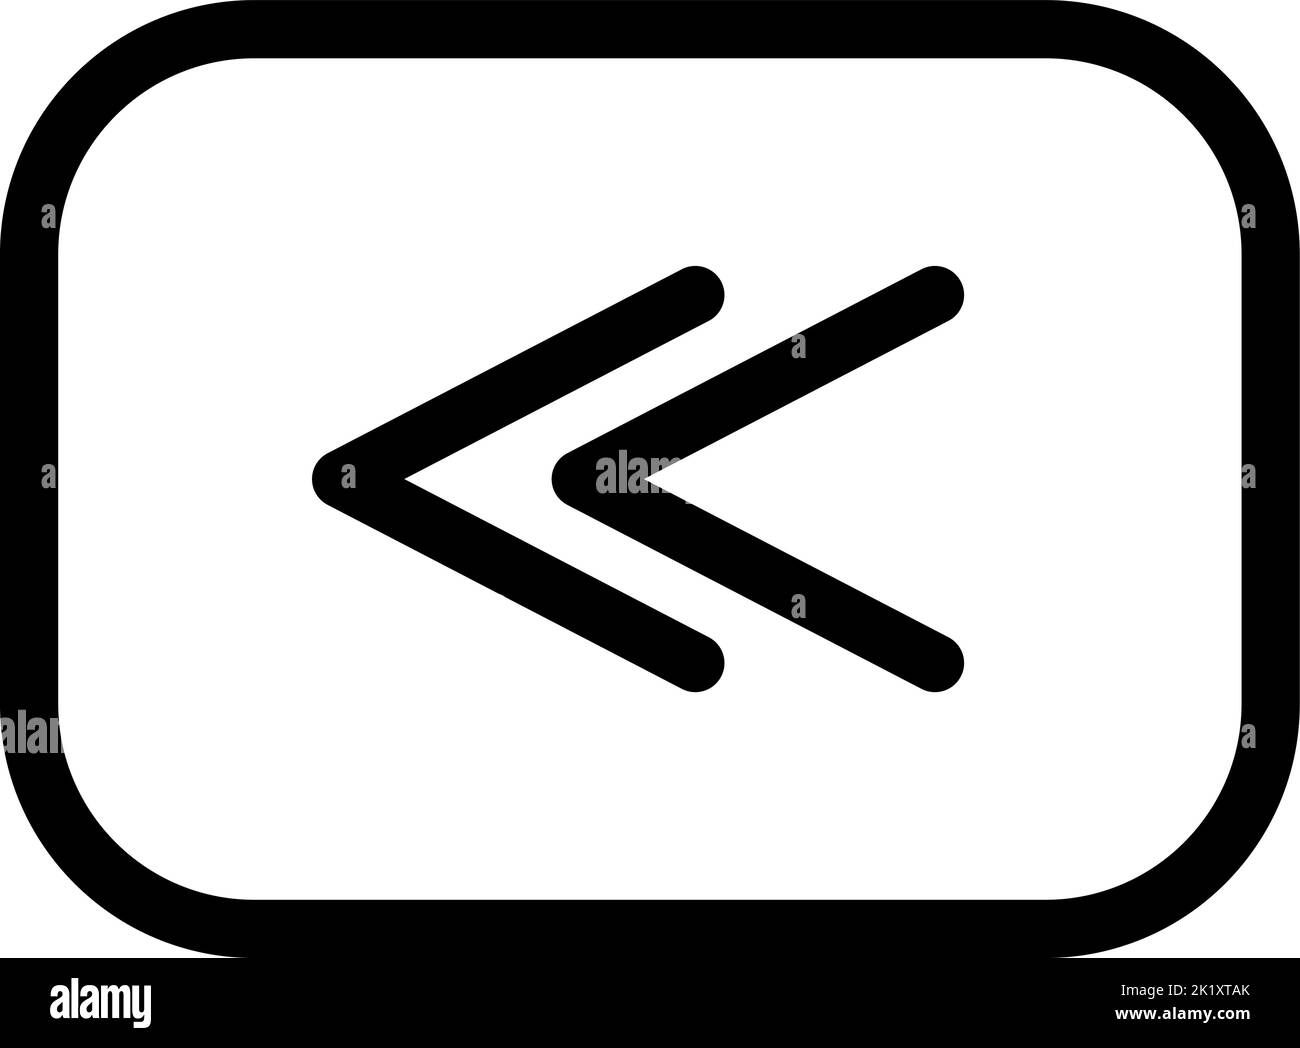 Professional vector rewind logo icon. Fast Symbol in Line Art Style for Design, Presentation Website or Mobile Apps Elements. Sign illustration. Pixel Stock Vector